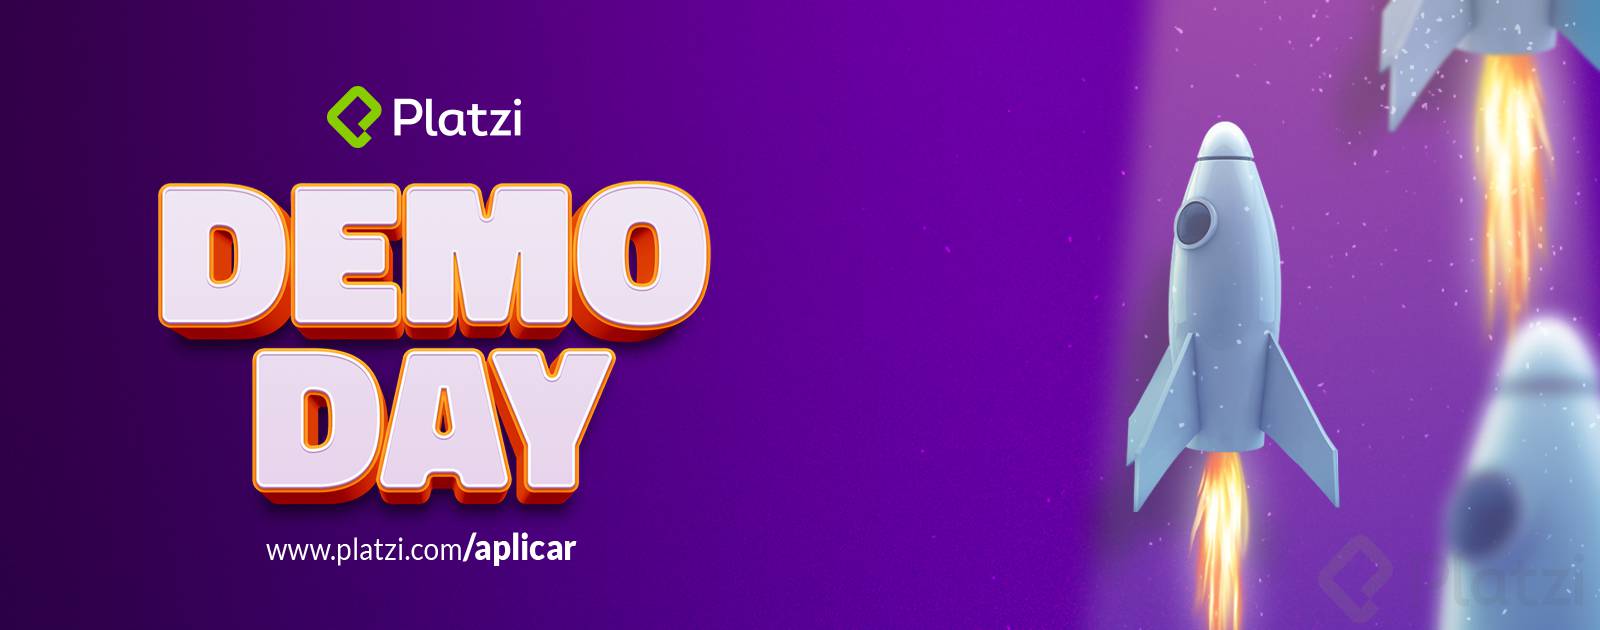 Demoday-2020-Cover-Blogspot-Brasil.png